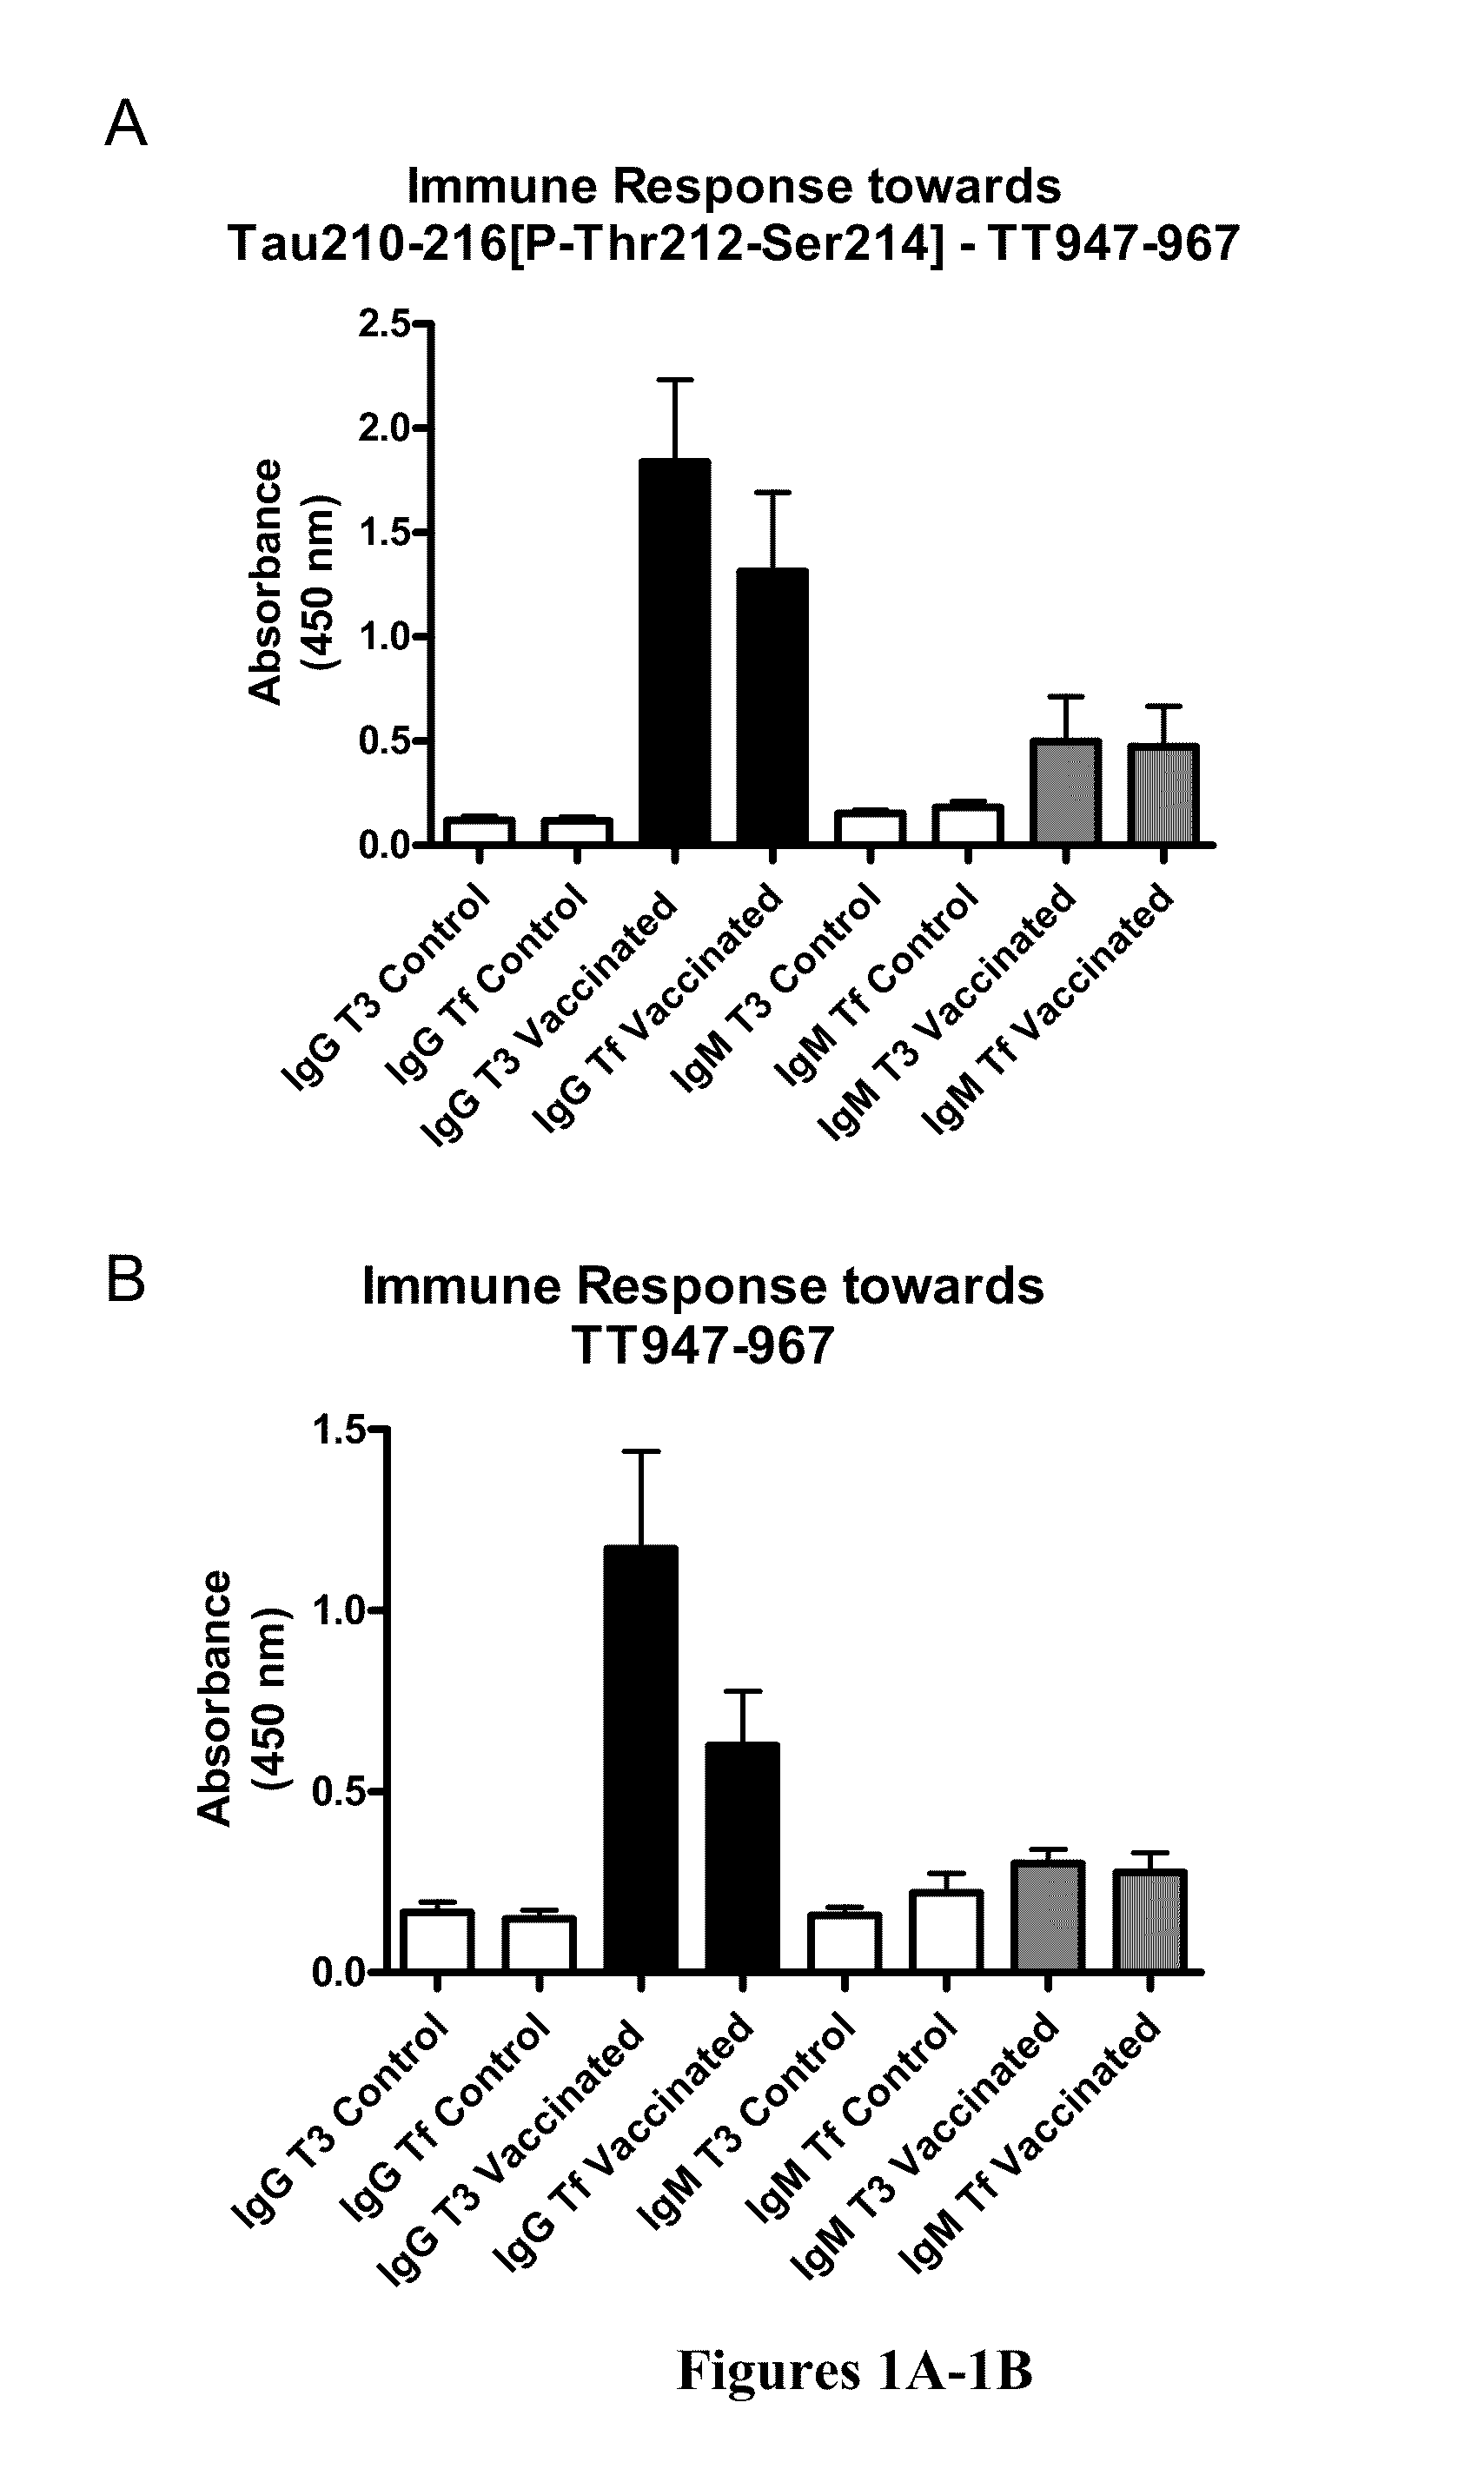 Immunological targeting of pathological tau proteins